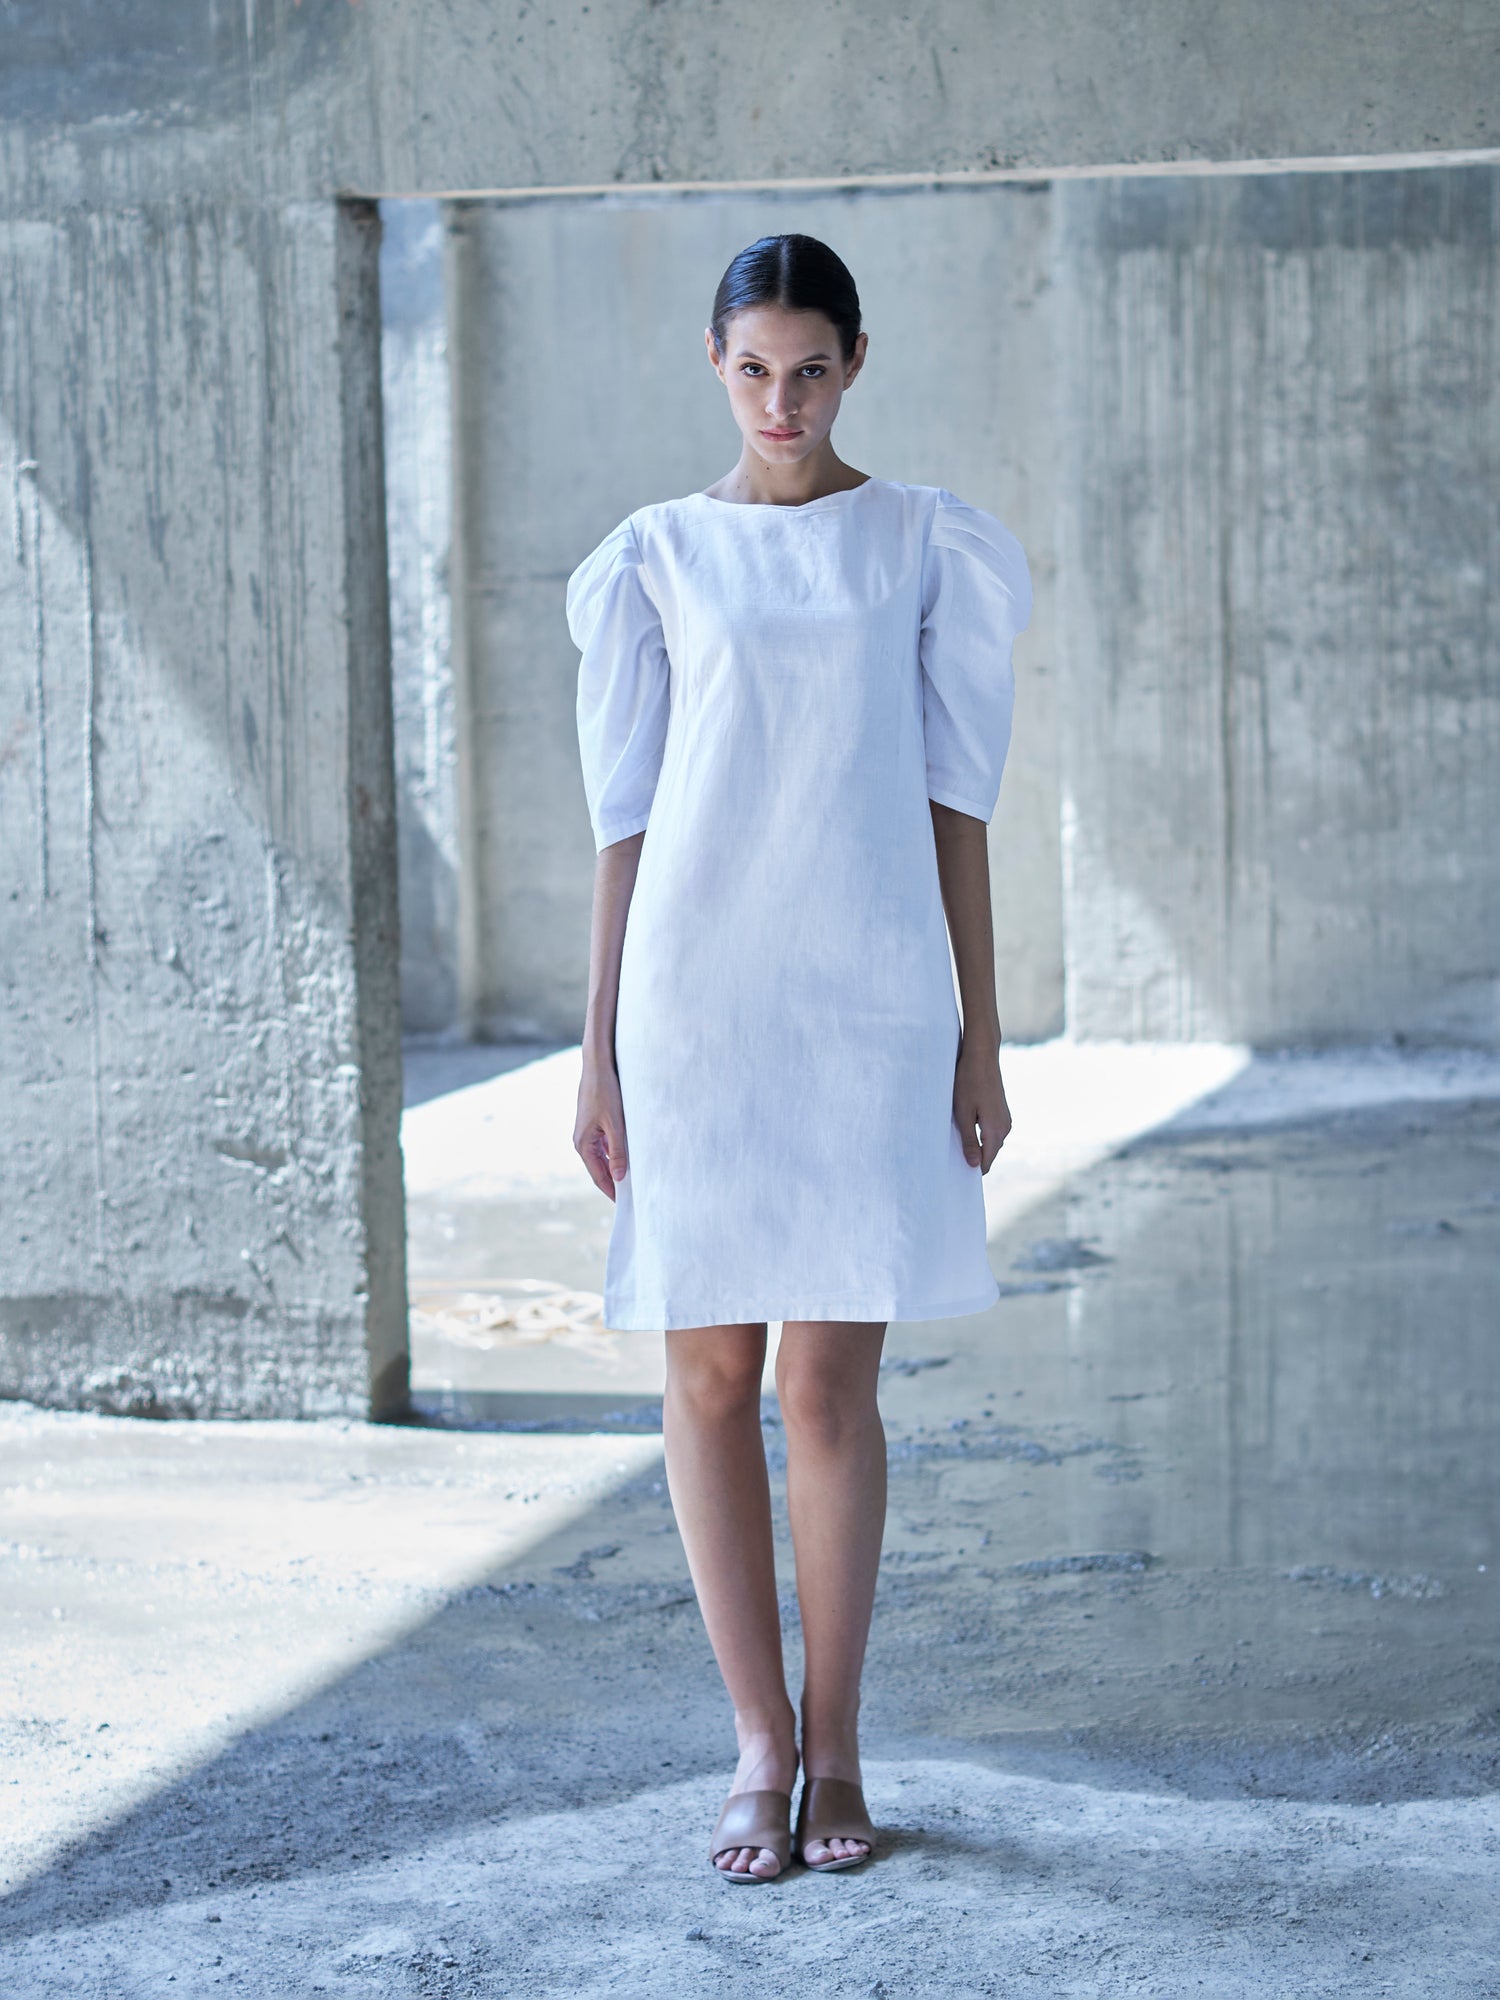 Diana Dress White